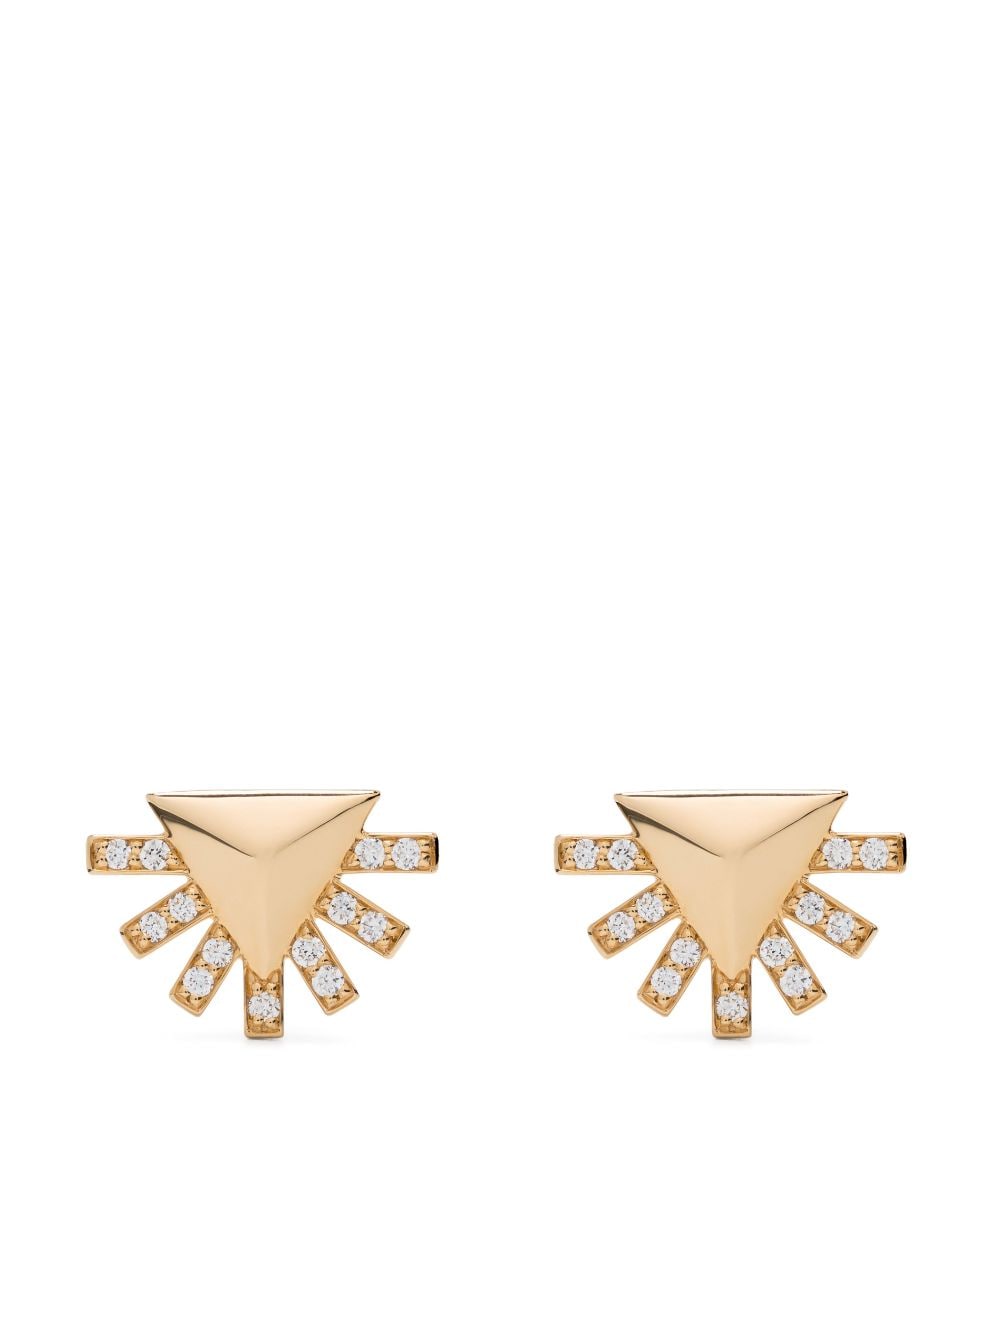 Harwell Godfrey 18kt yellow gold Sunburst diamond stud earrings von Harwell Godfrey